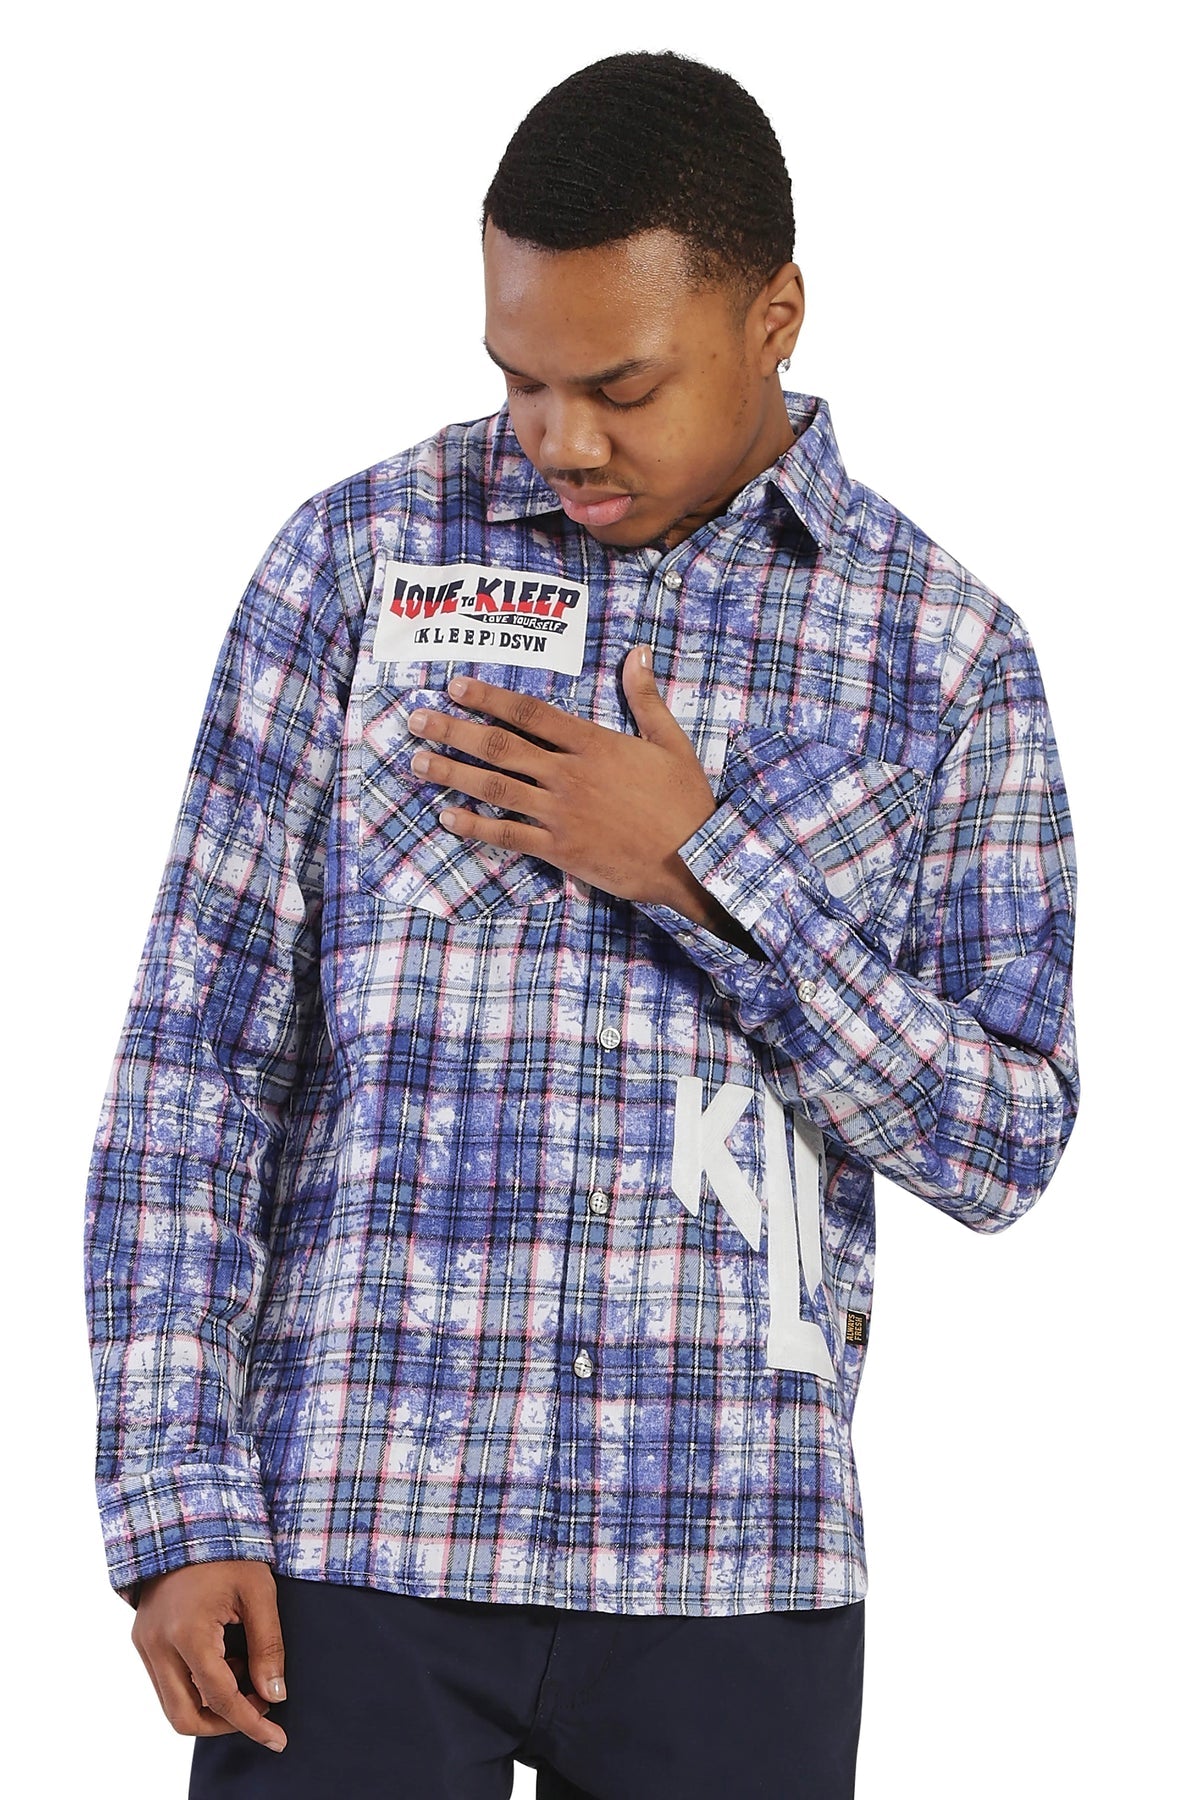 Kleep Unik Men's Premium Flannel Button Down Shirt